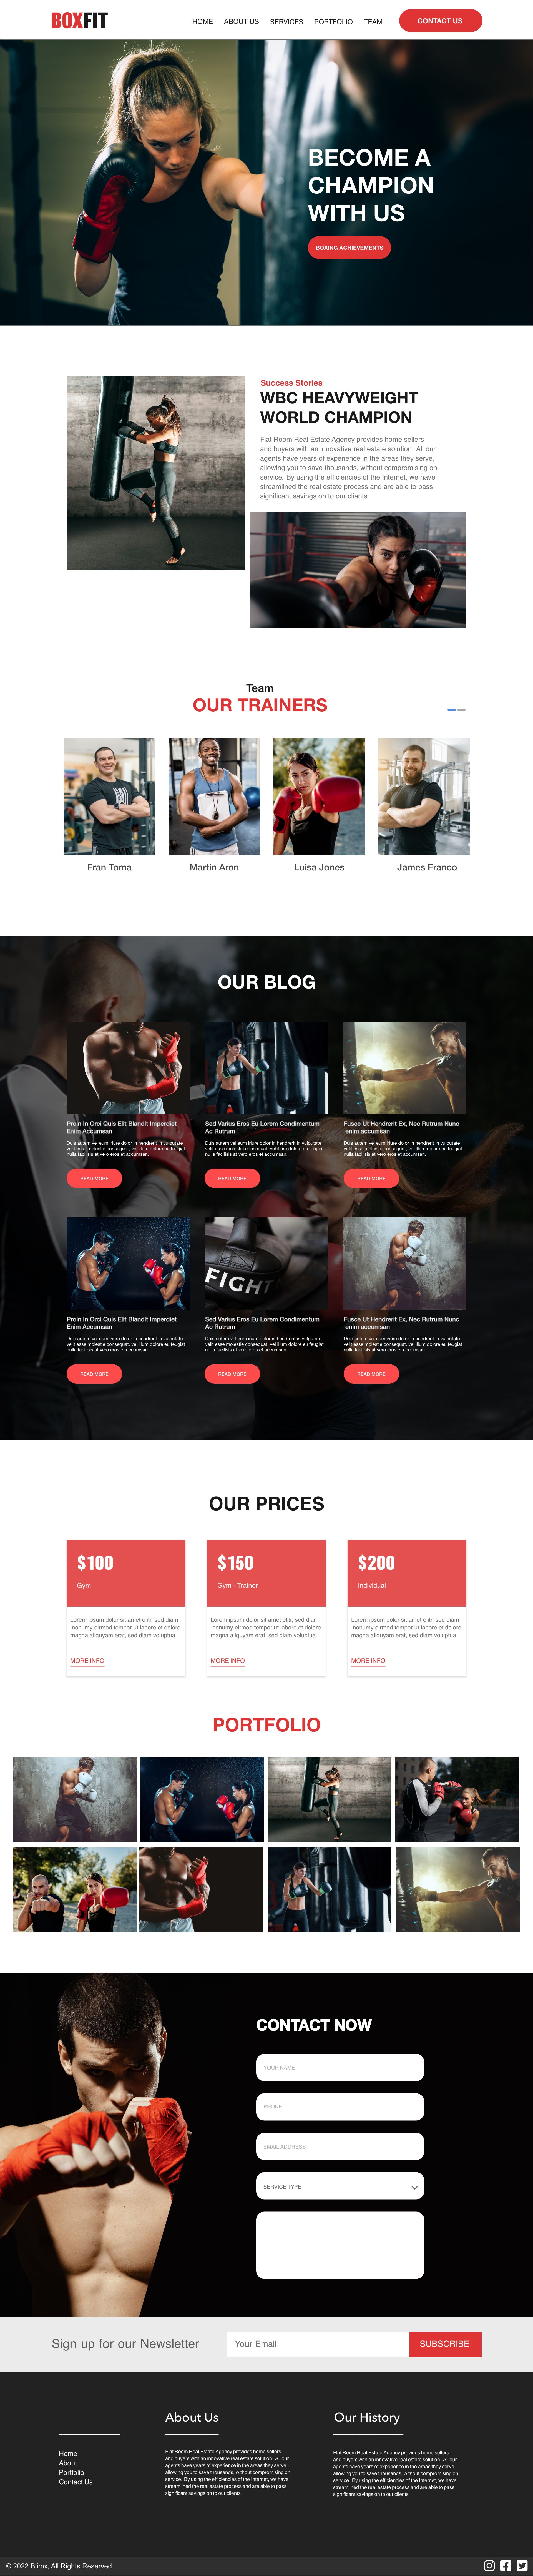 Box Fit Website Design